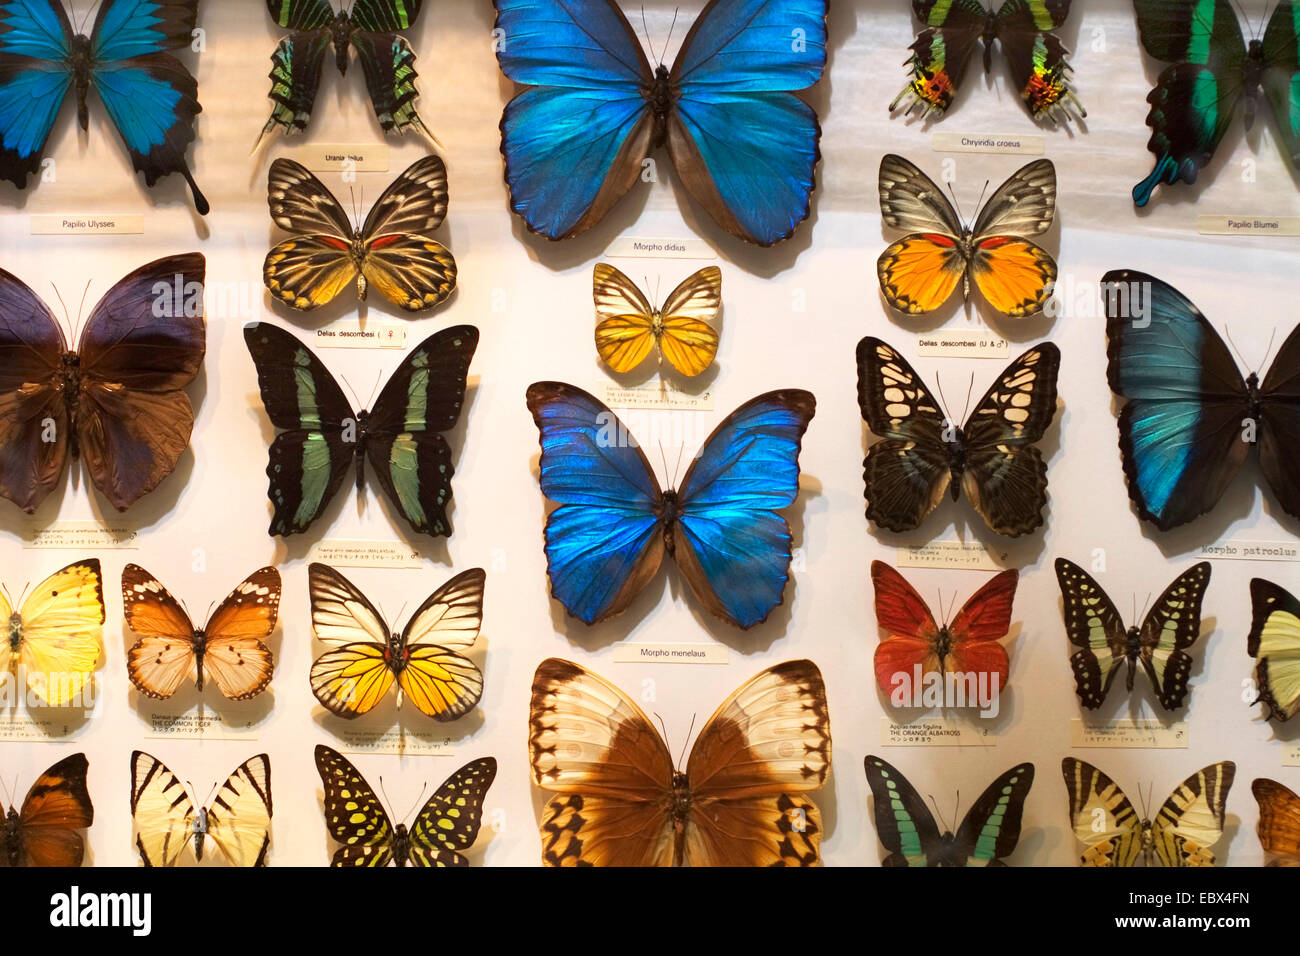 butterflies for sale, Kuala Lumpur Airport, Malaysia Stock Photo